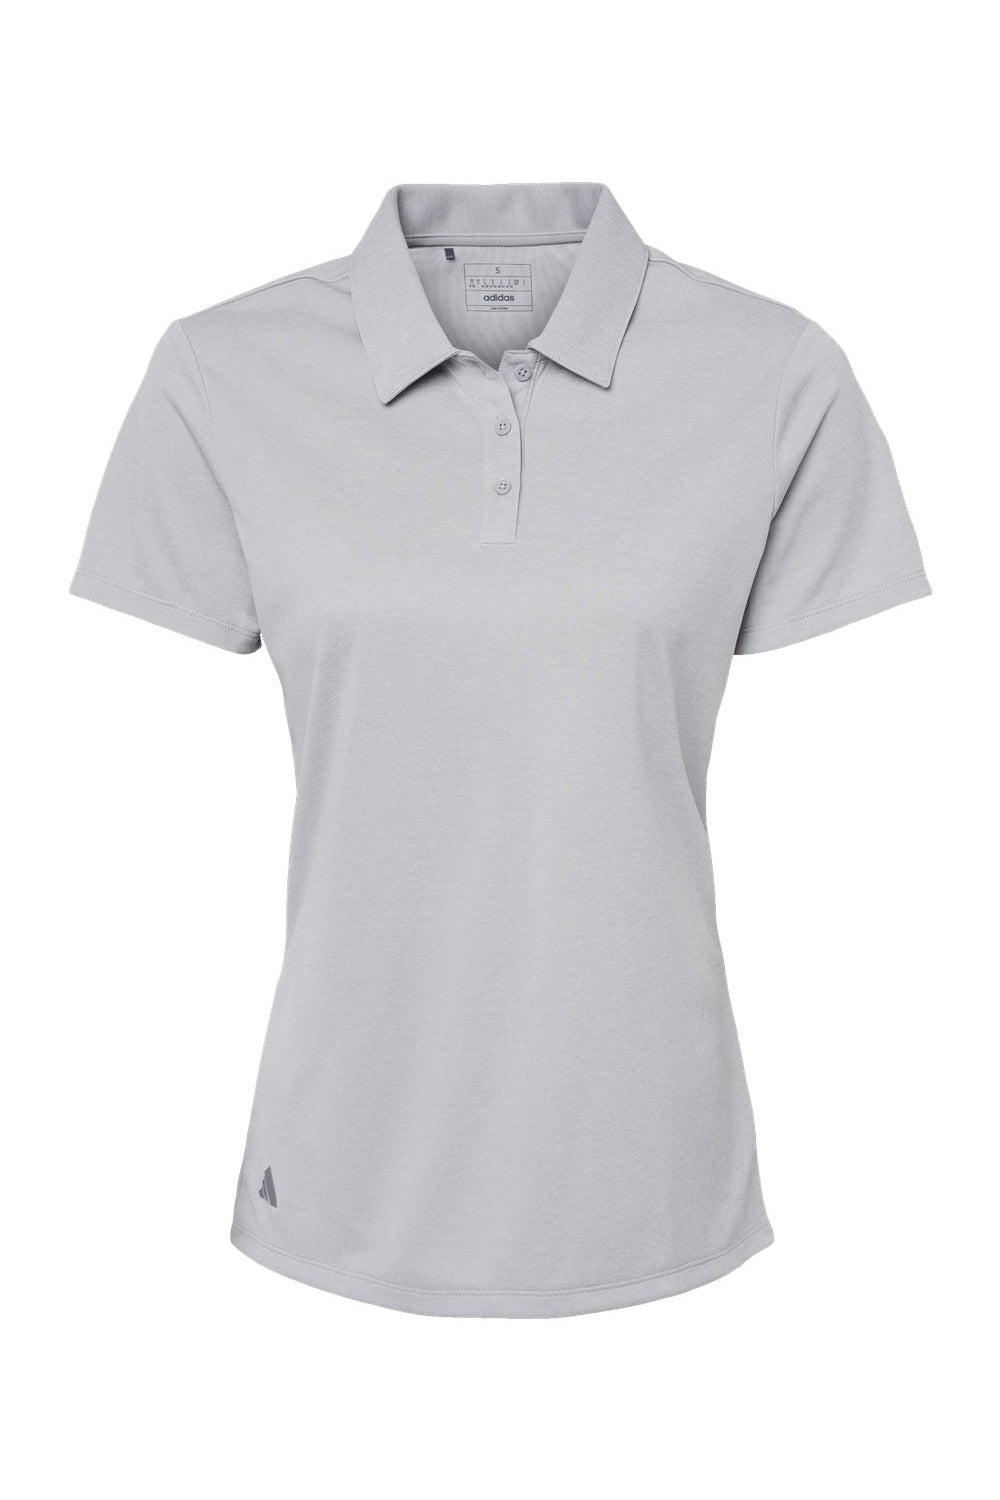 Adidas A583 Womens Heathered Short Sleeve Polo Shirt Grey Melange Flat Front